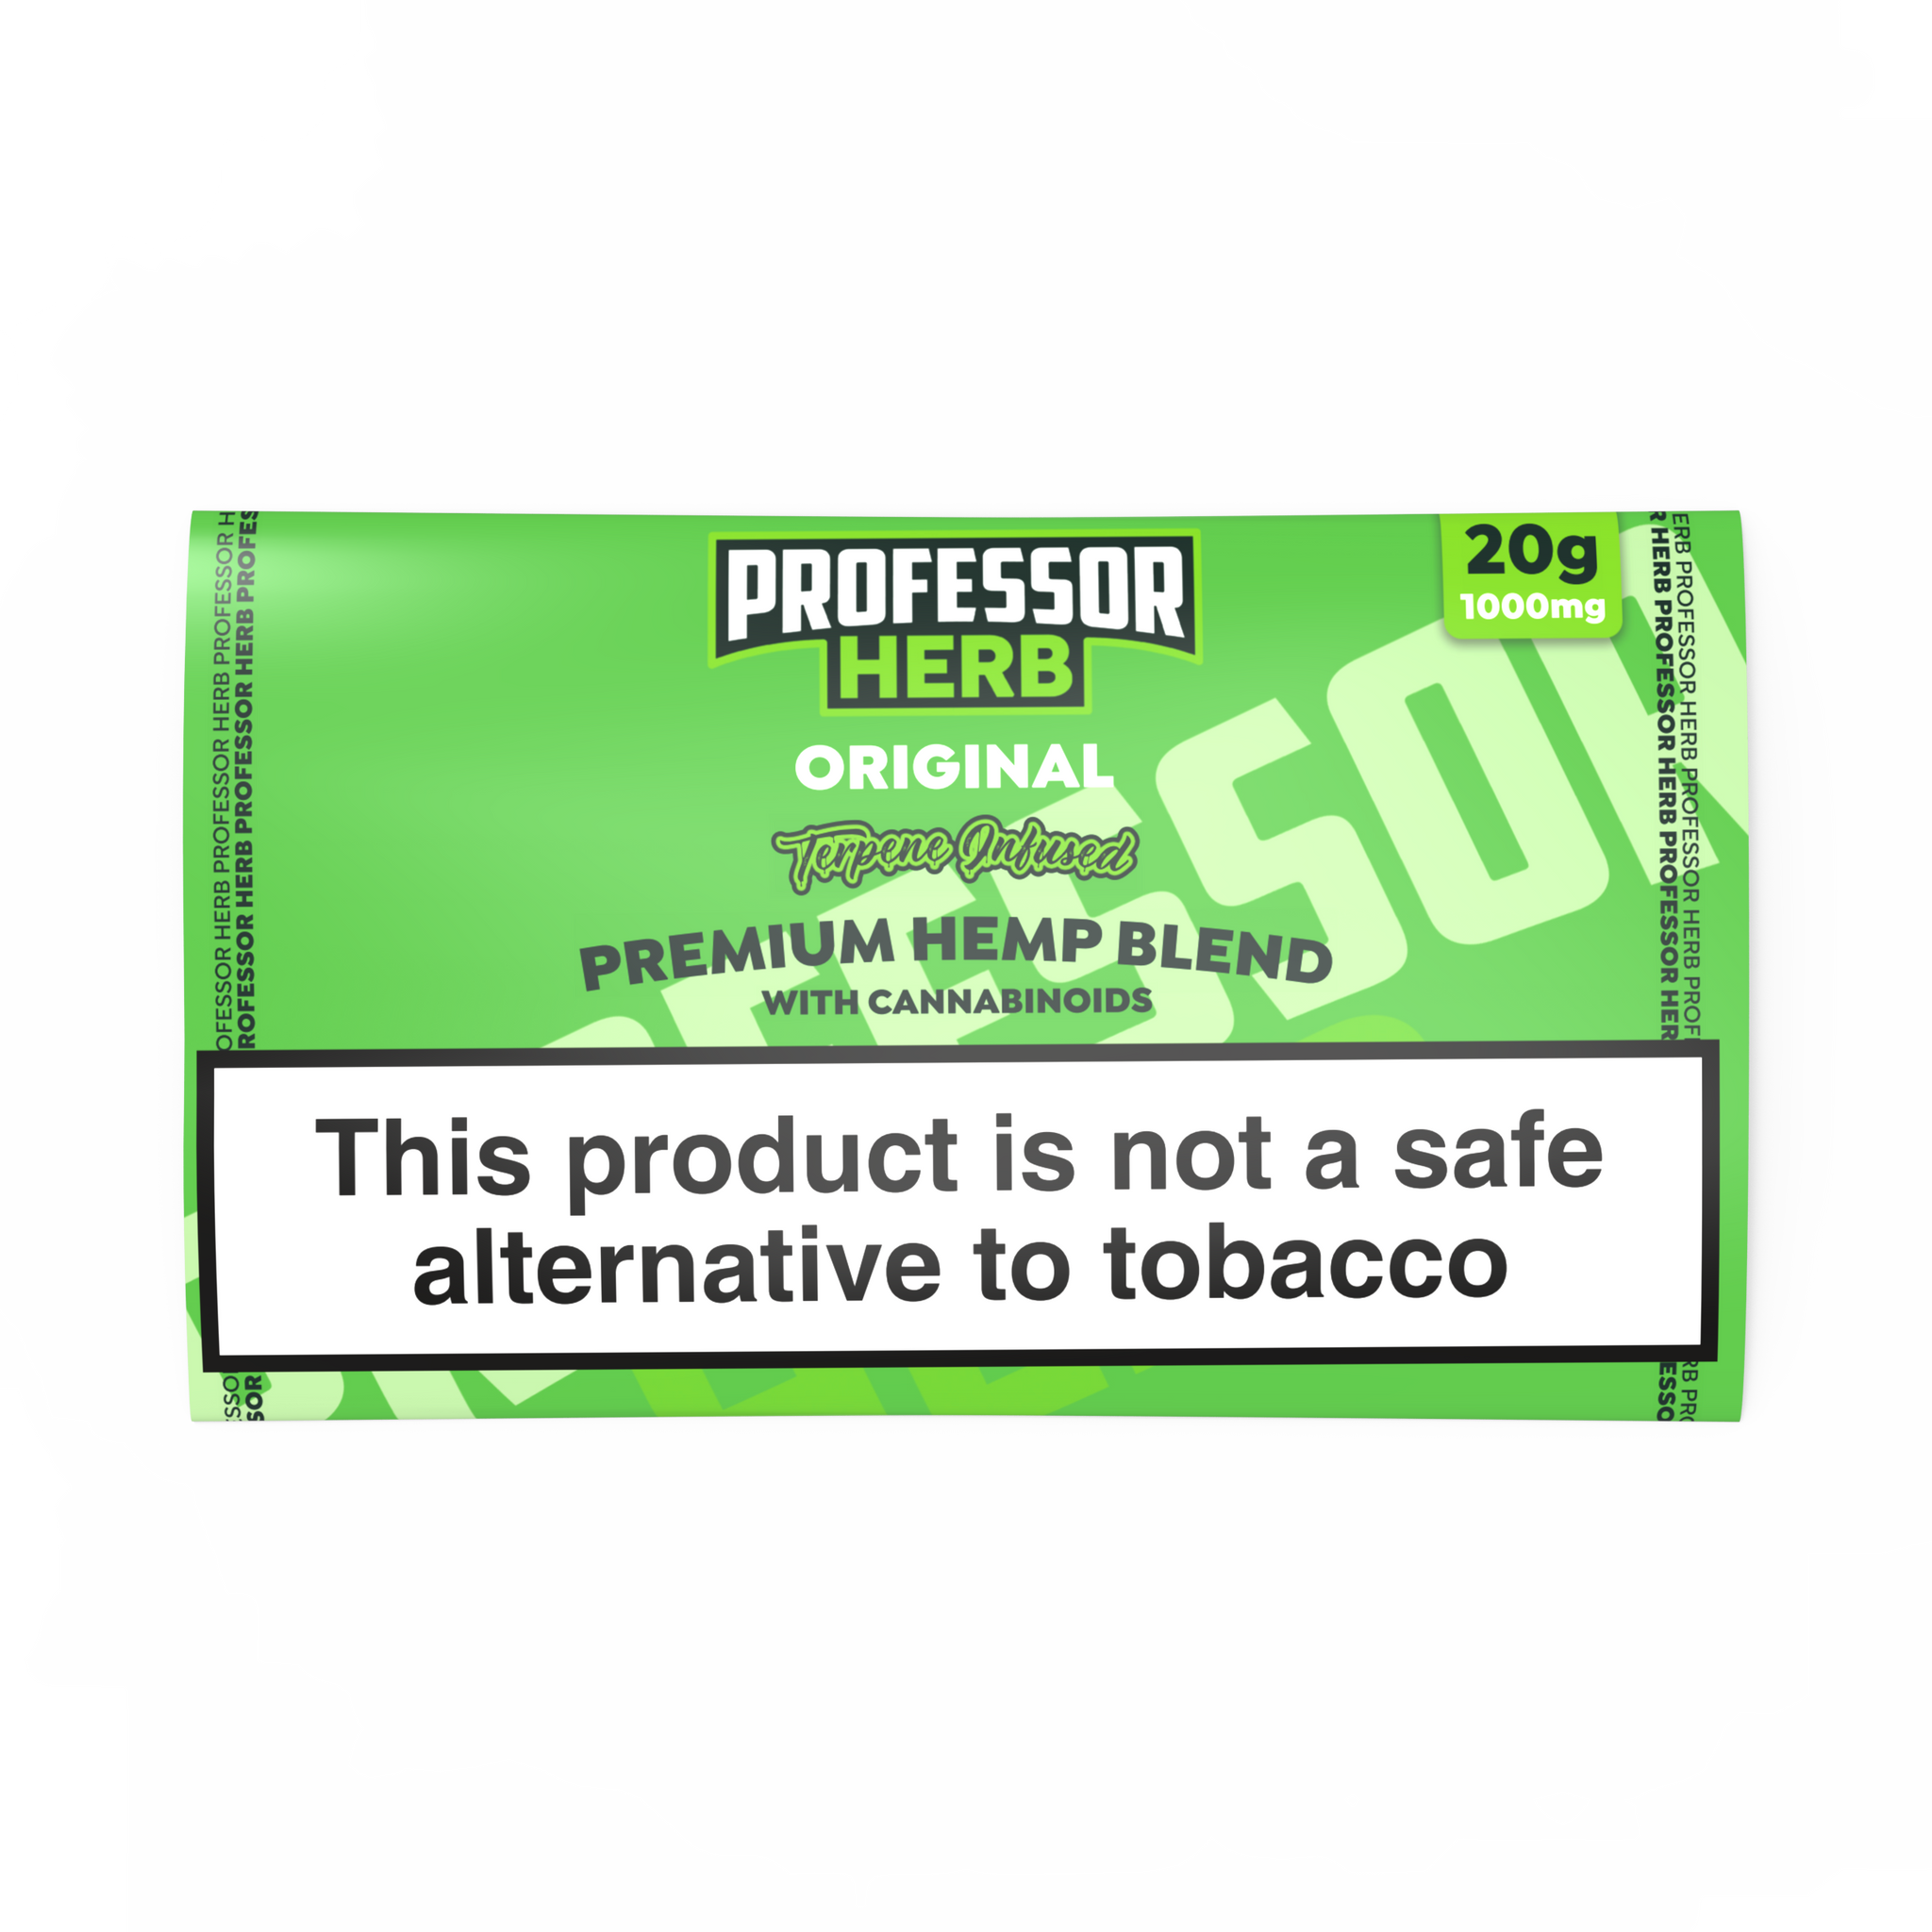 Professor Herb Premium Hemp Blend (20g) - Original